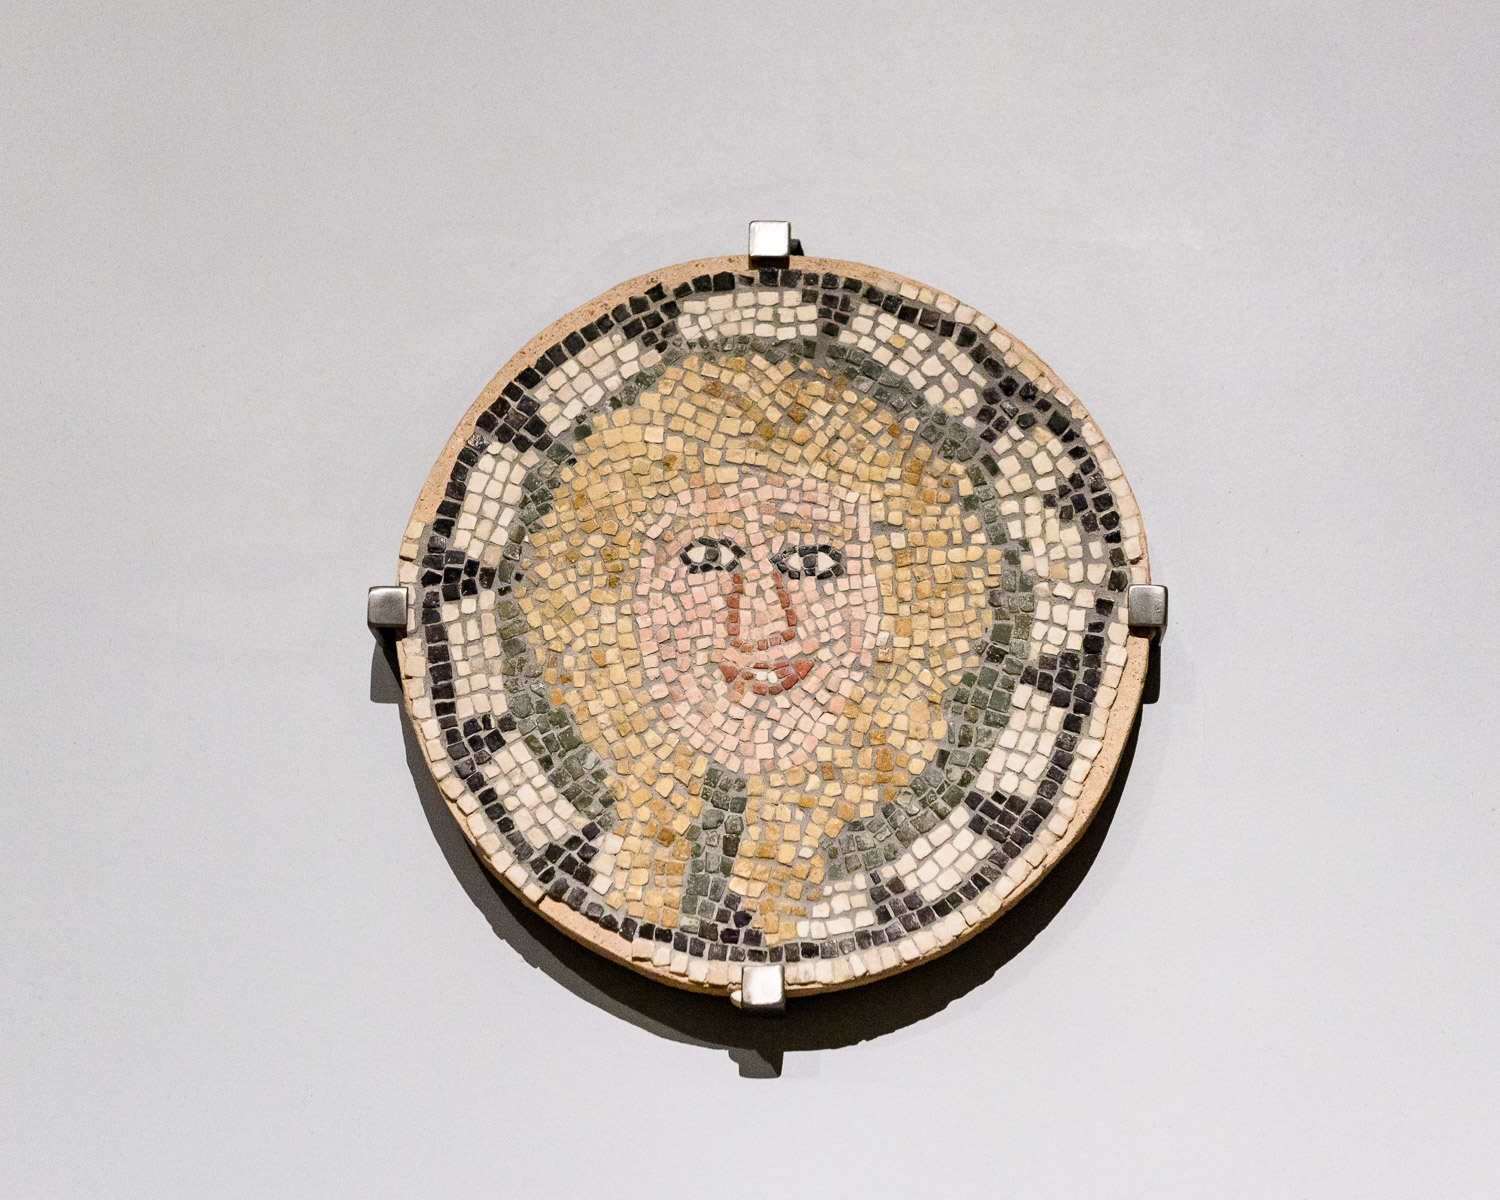  Mosaic at the Benaki Museum 